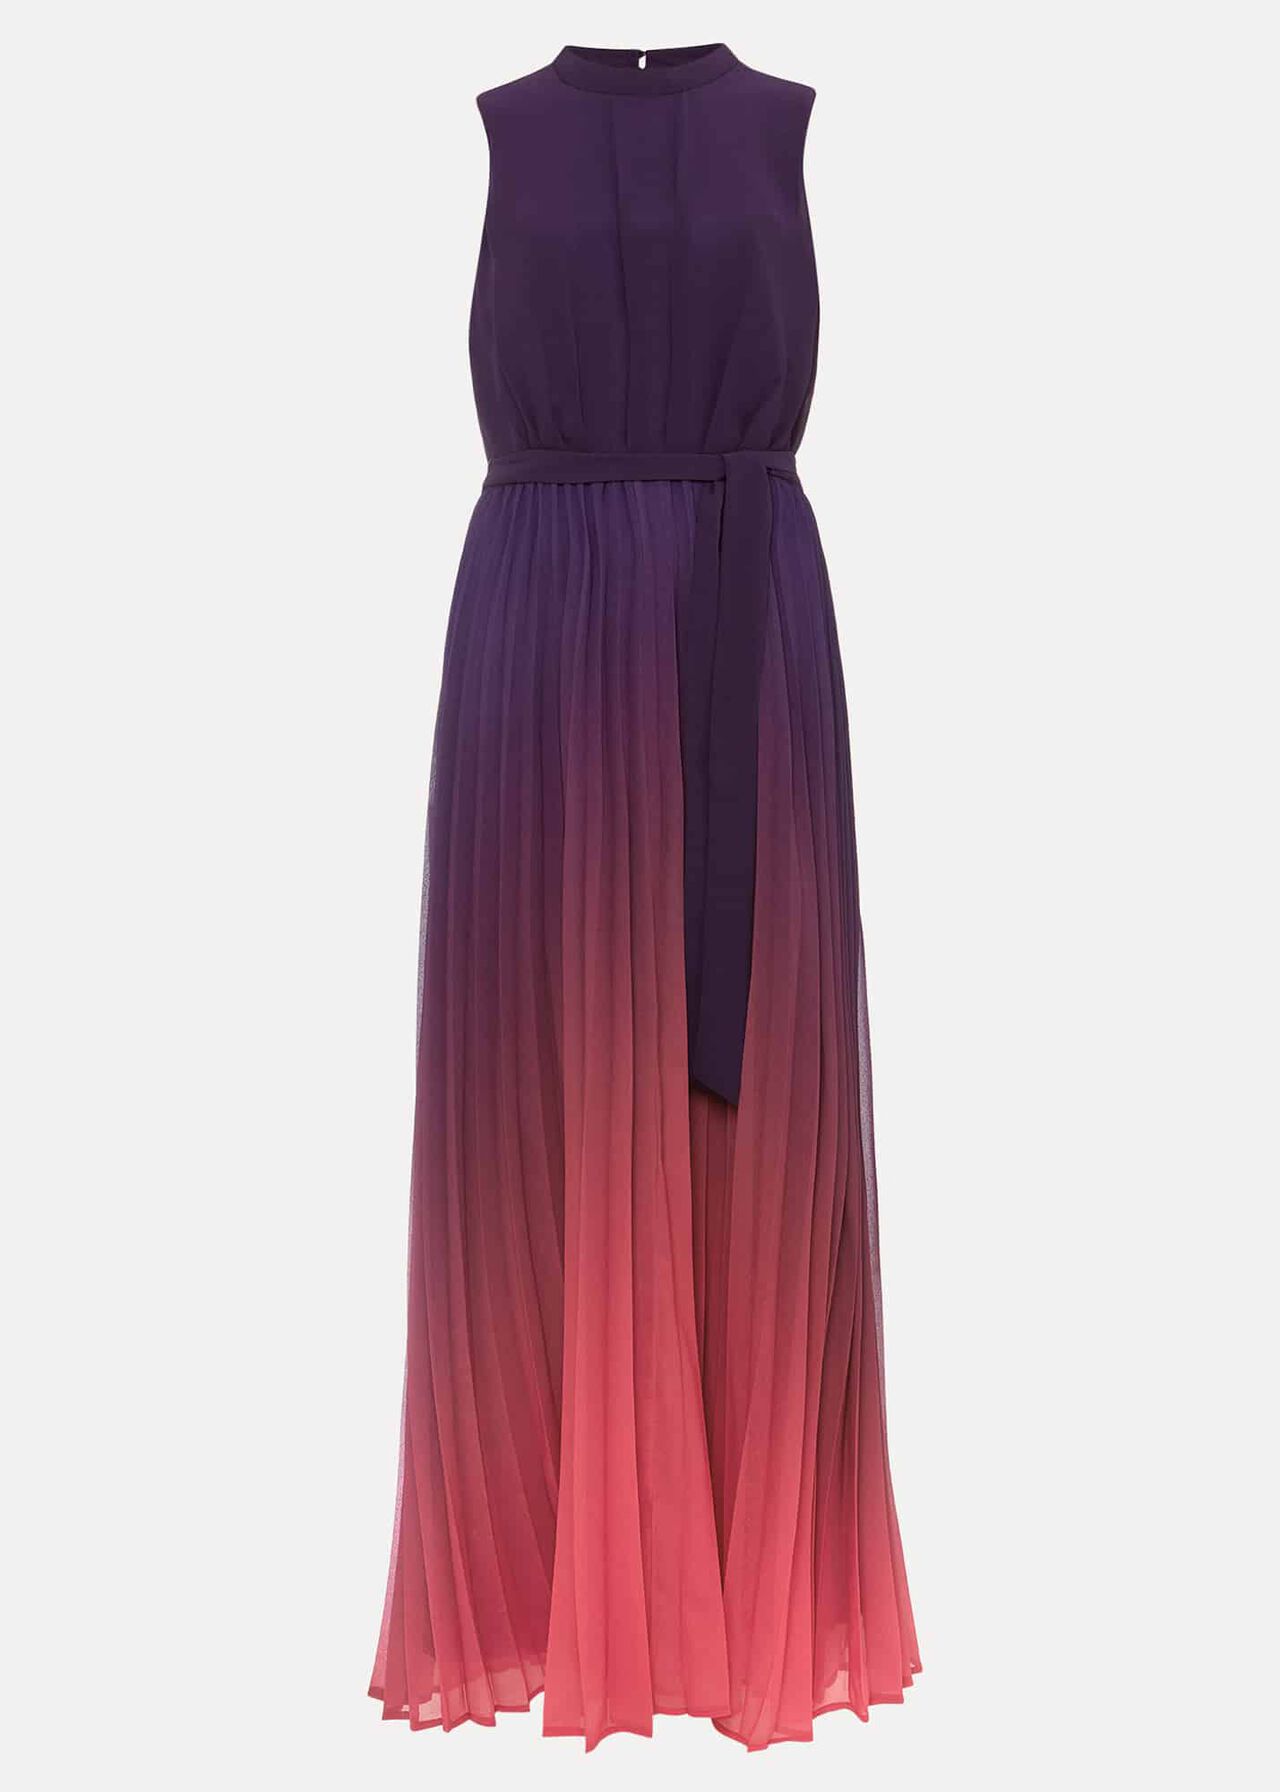 Lily Dip Dye Pleated Dress